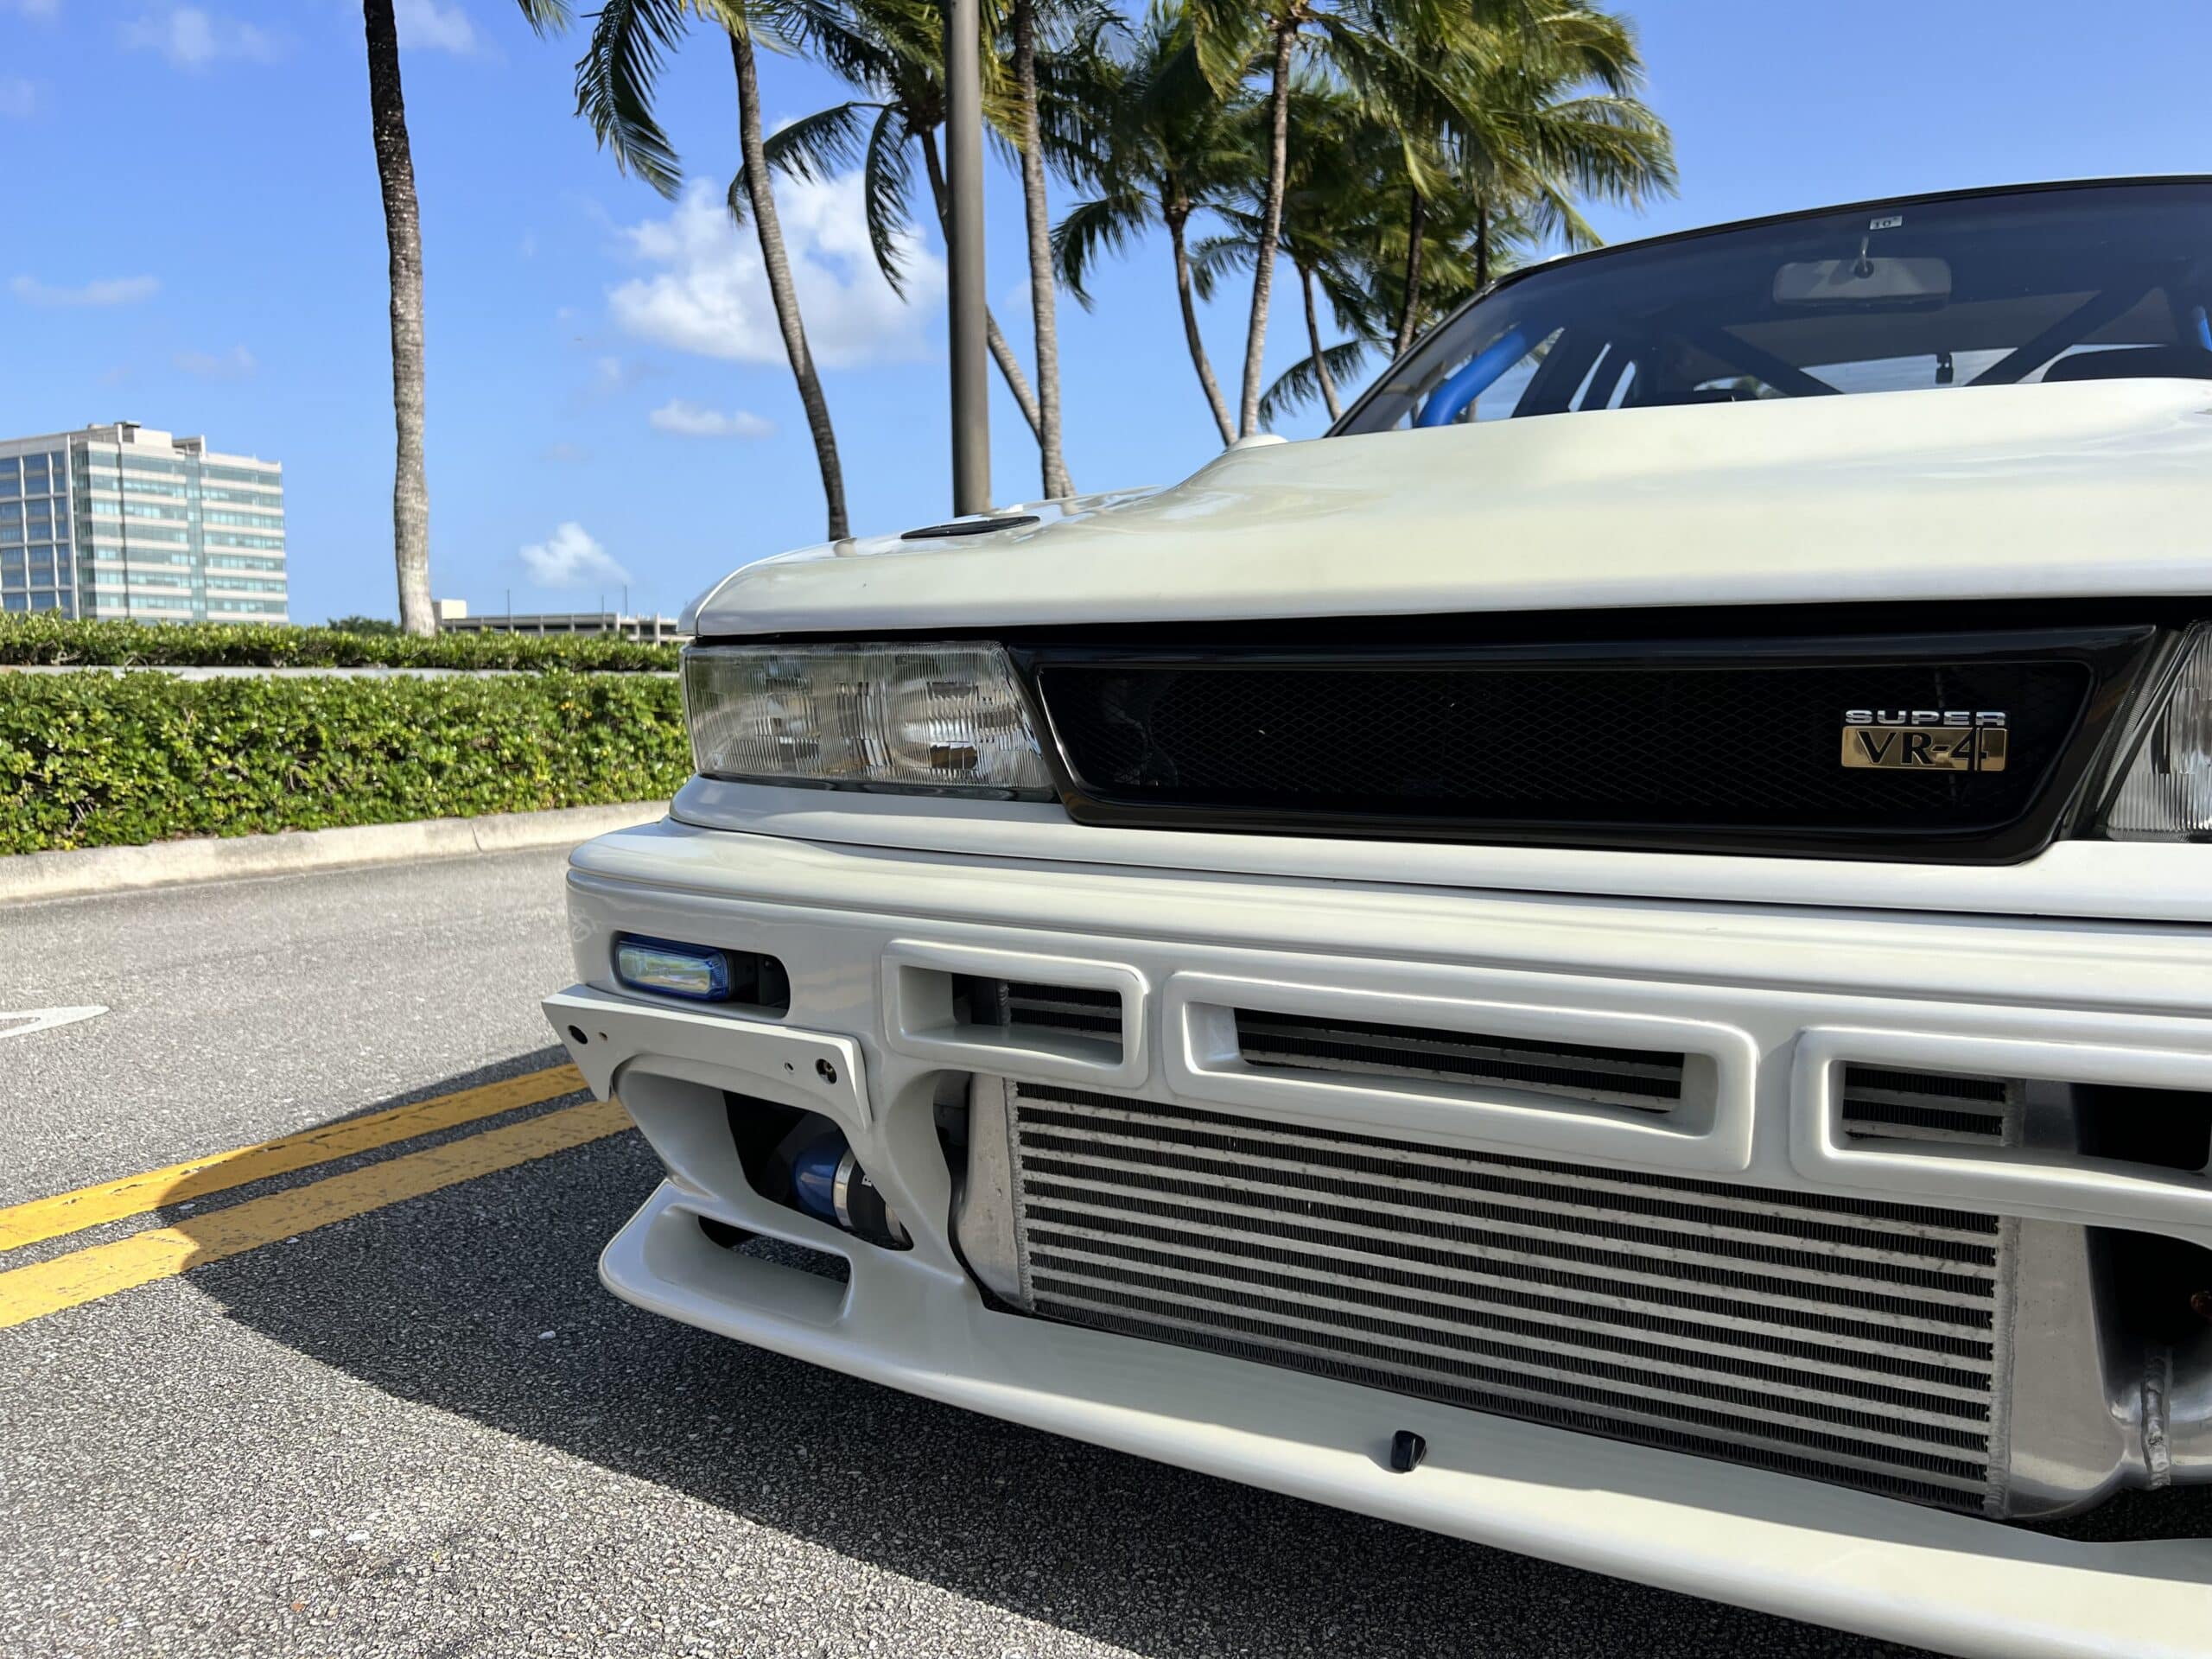 1990 Mitsubishi Galant Super VR4 Widebody SHOW CAR – 4G63 – JDM – Carbon Seats – Rally Suspension – $100k Build